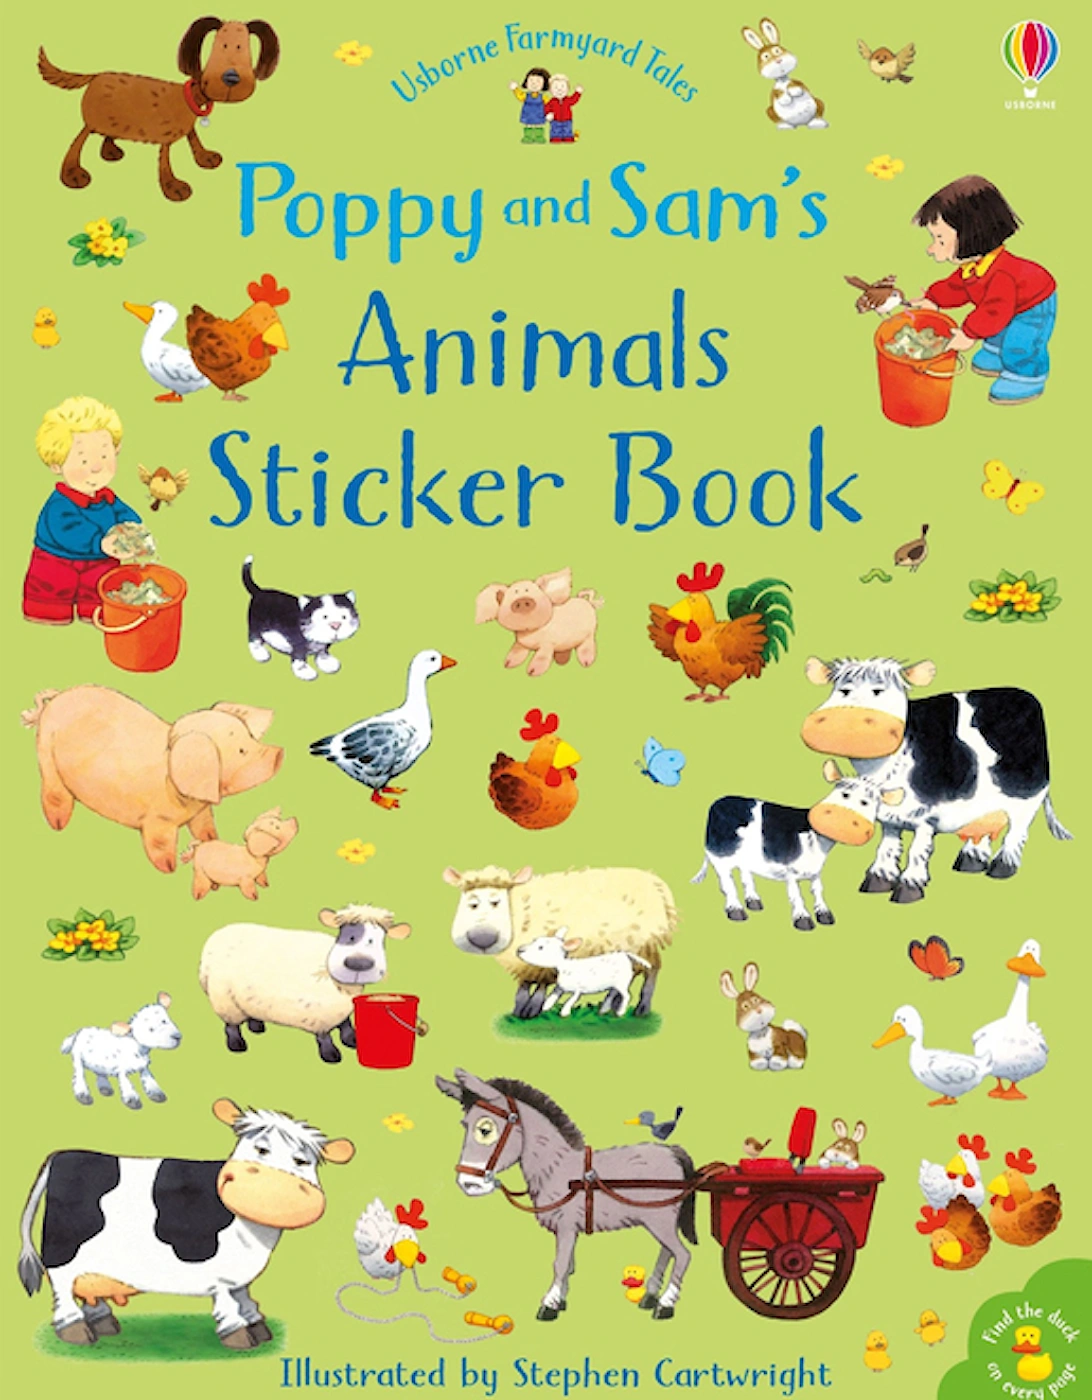 Farmyard Tales: Poppy and Sam's Animals Sticker Book, 2 of 1